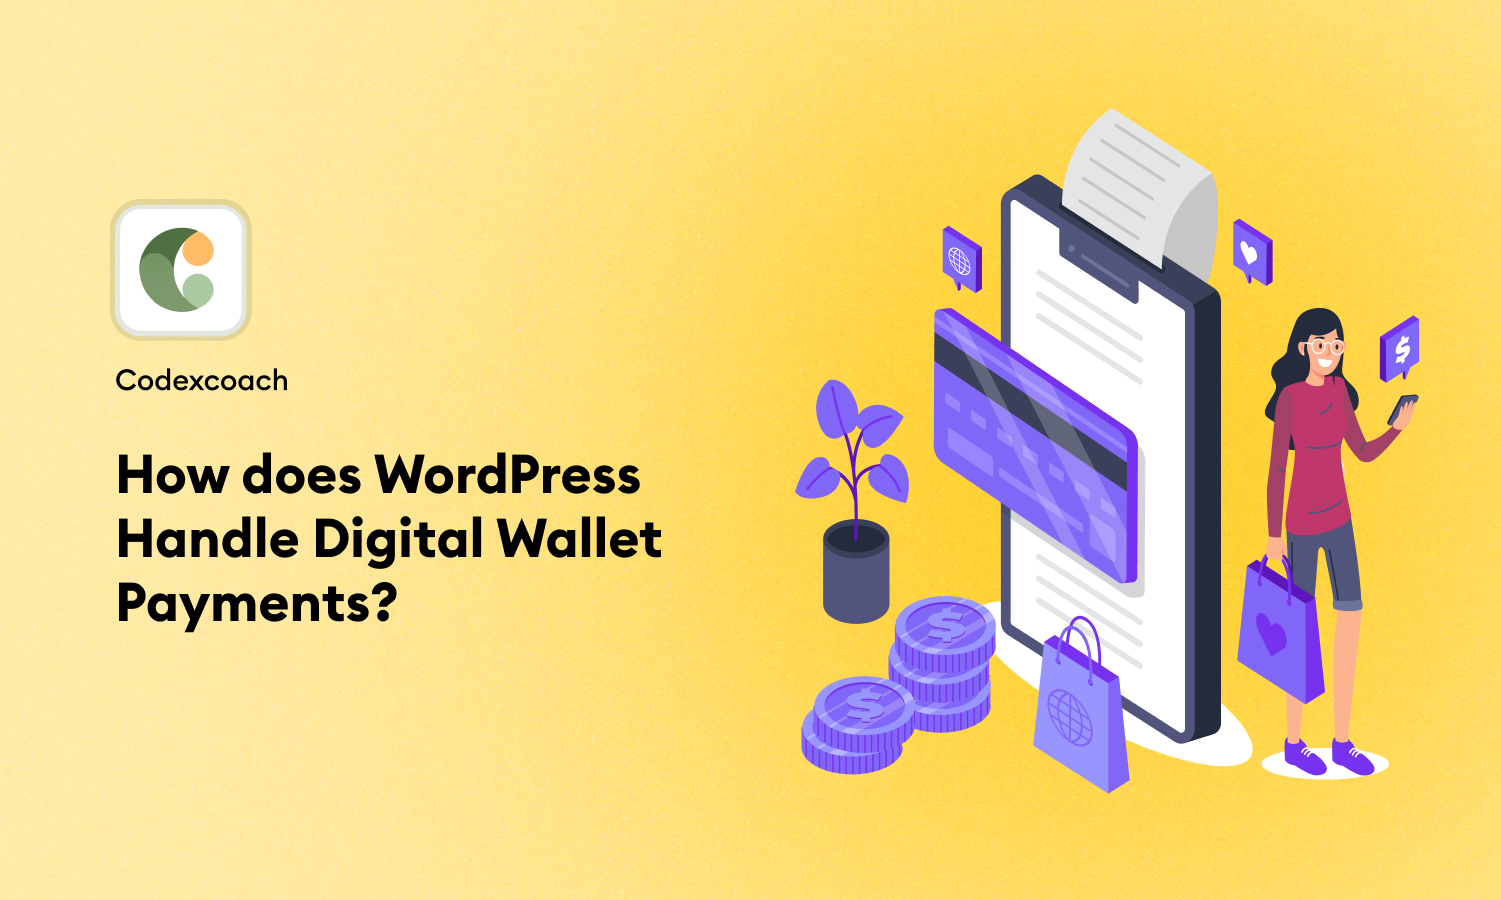 How does WordPress Handle Digital Wallet Payments